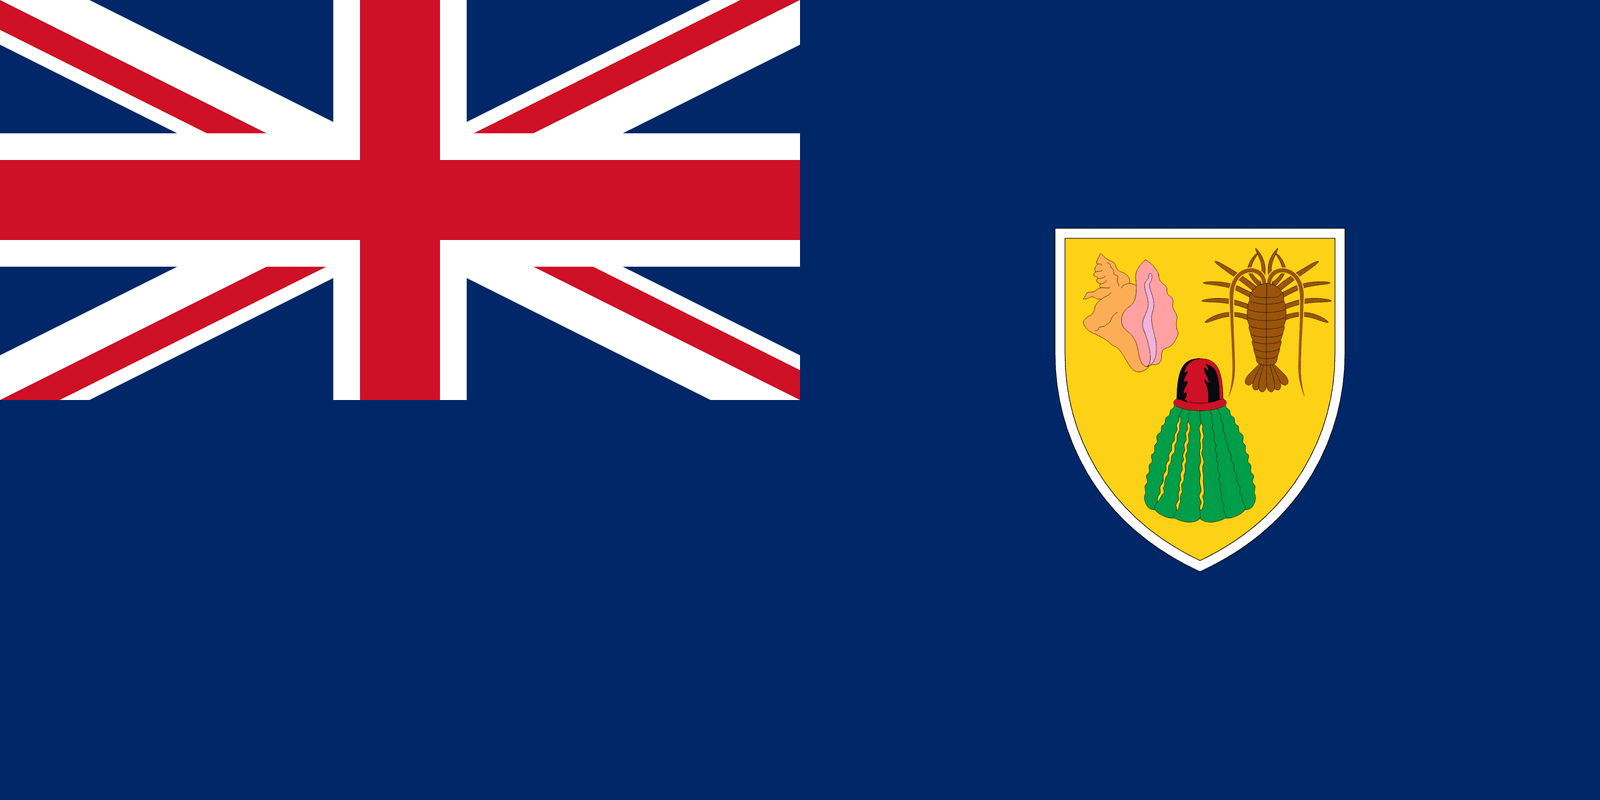 Turks and Caicos Islands - Powered by Eduhyme.com